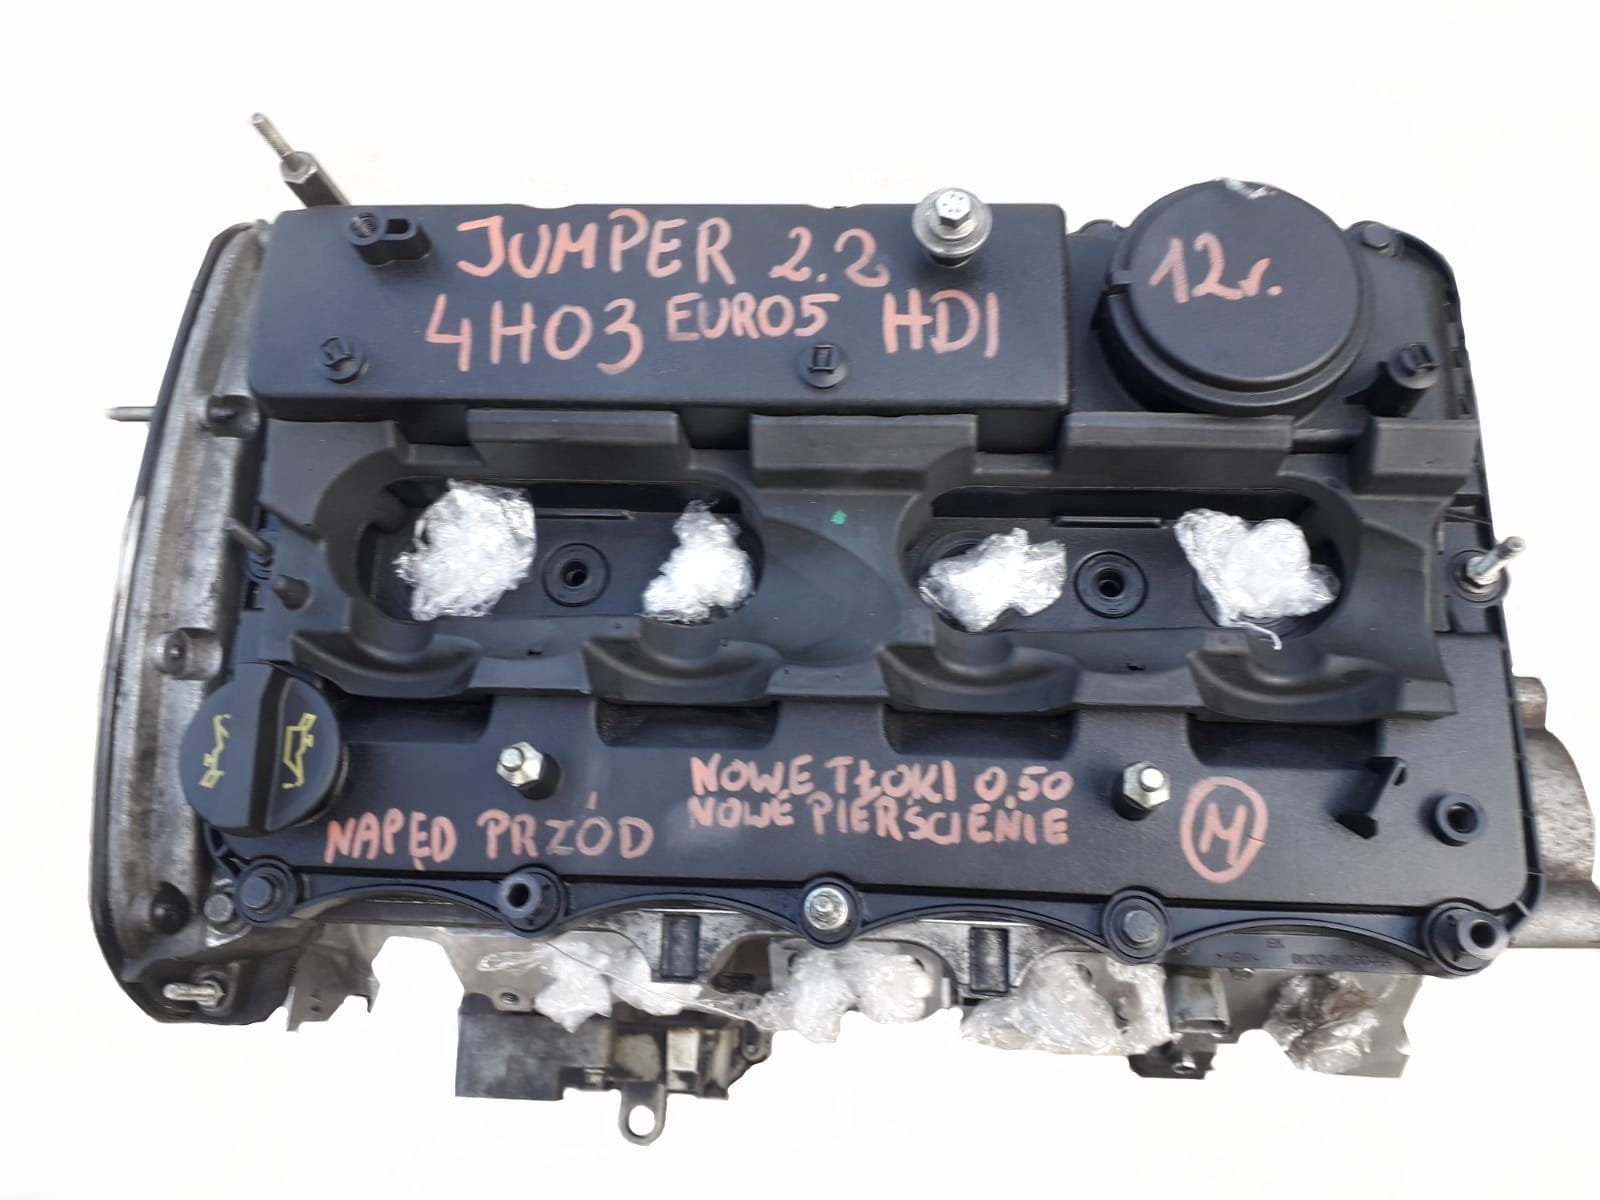 Silnik Jumper 2.2 Euro 5 4H03 - Moto-Enrico